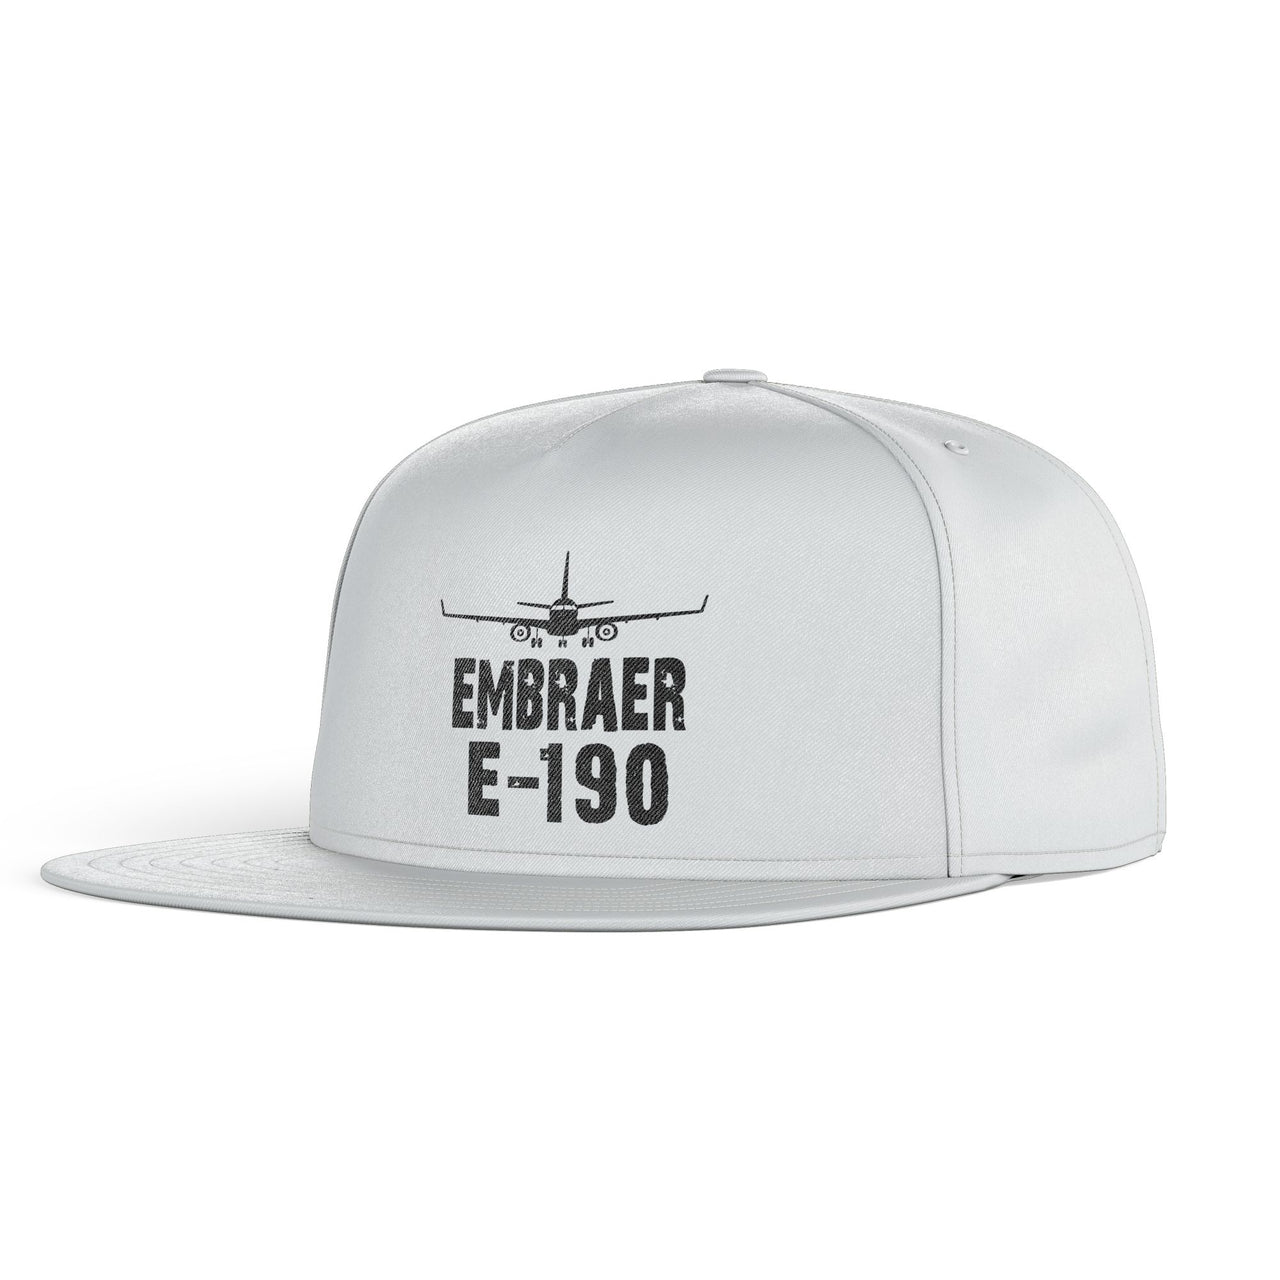 Embraer E-190 & Plane Designed Snapback Caps & Hats